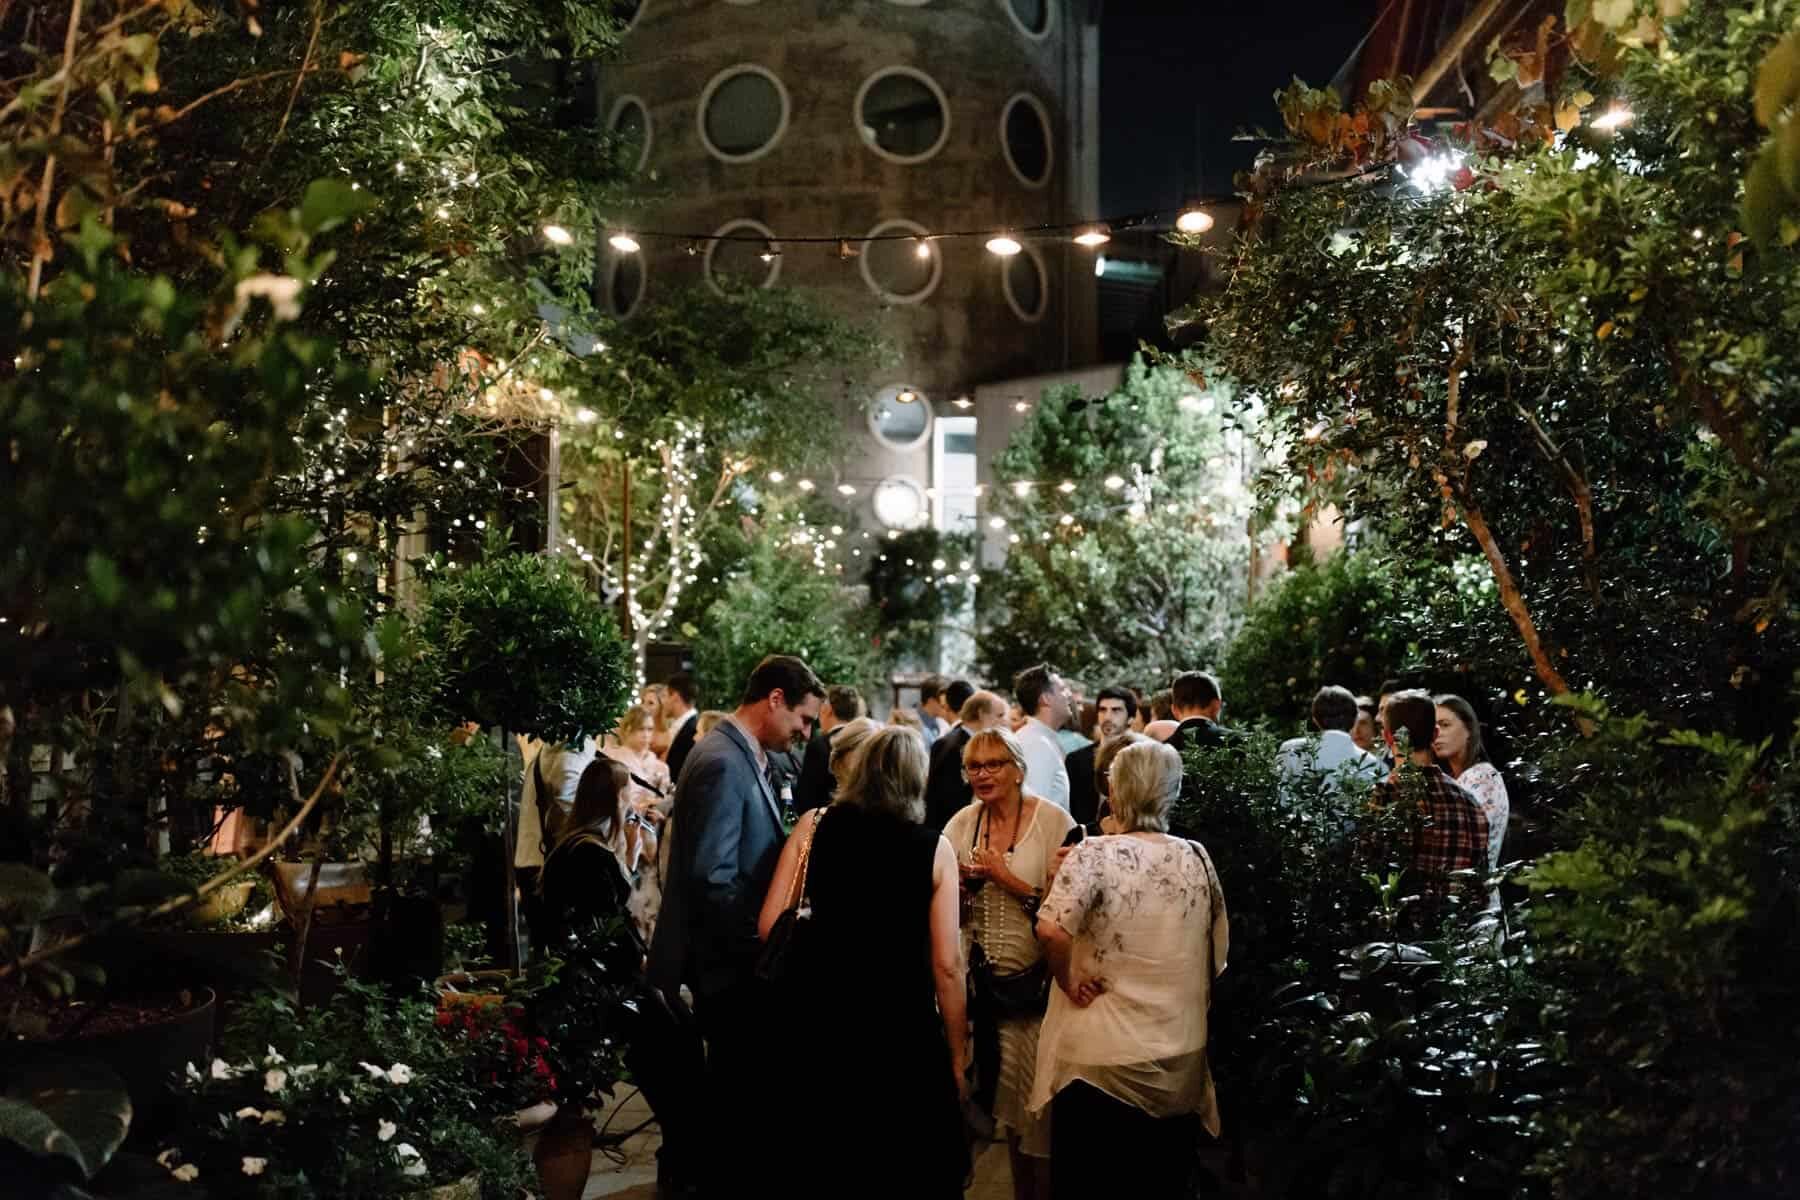 Surprise twilight wedding at The Grounds of Alexandria, Sydney / Photography by Matt Godkin